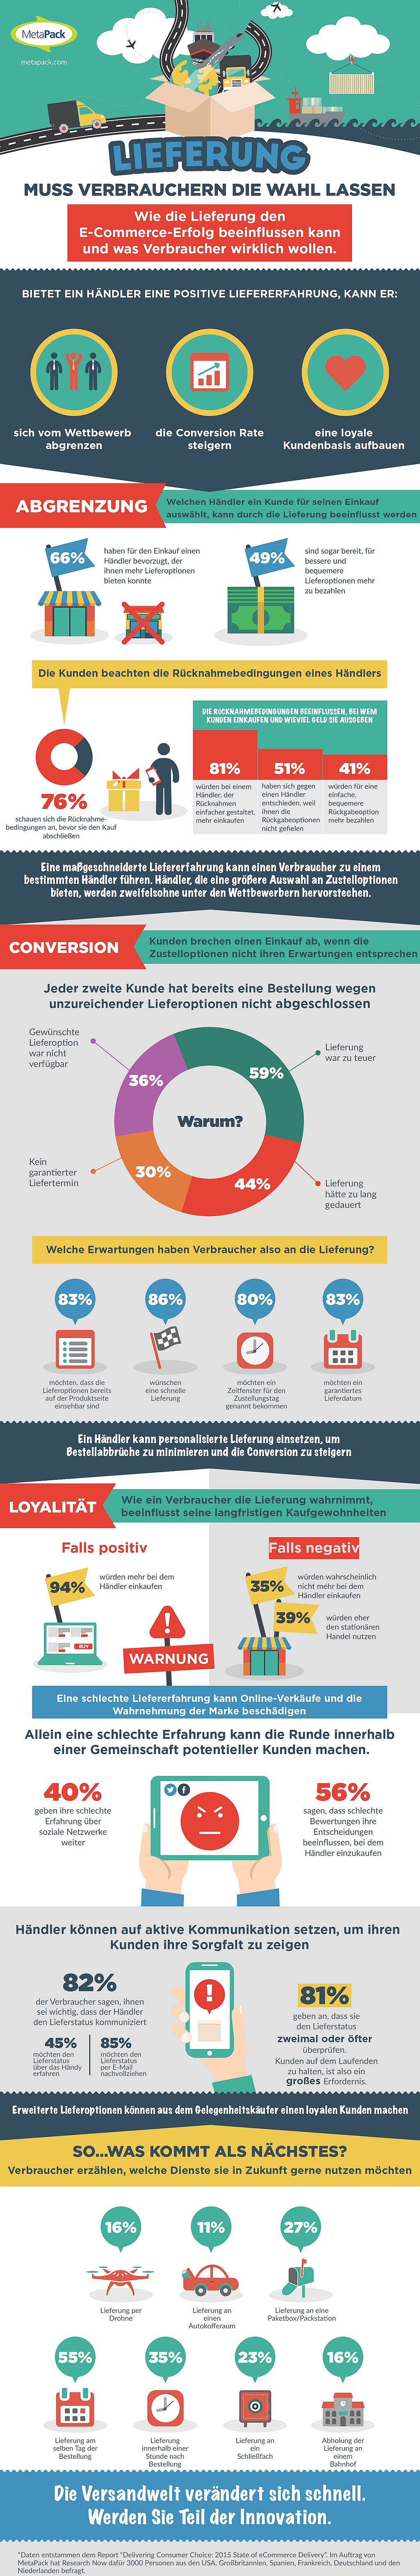 infografik metapack Lieferung online shop